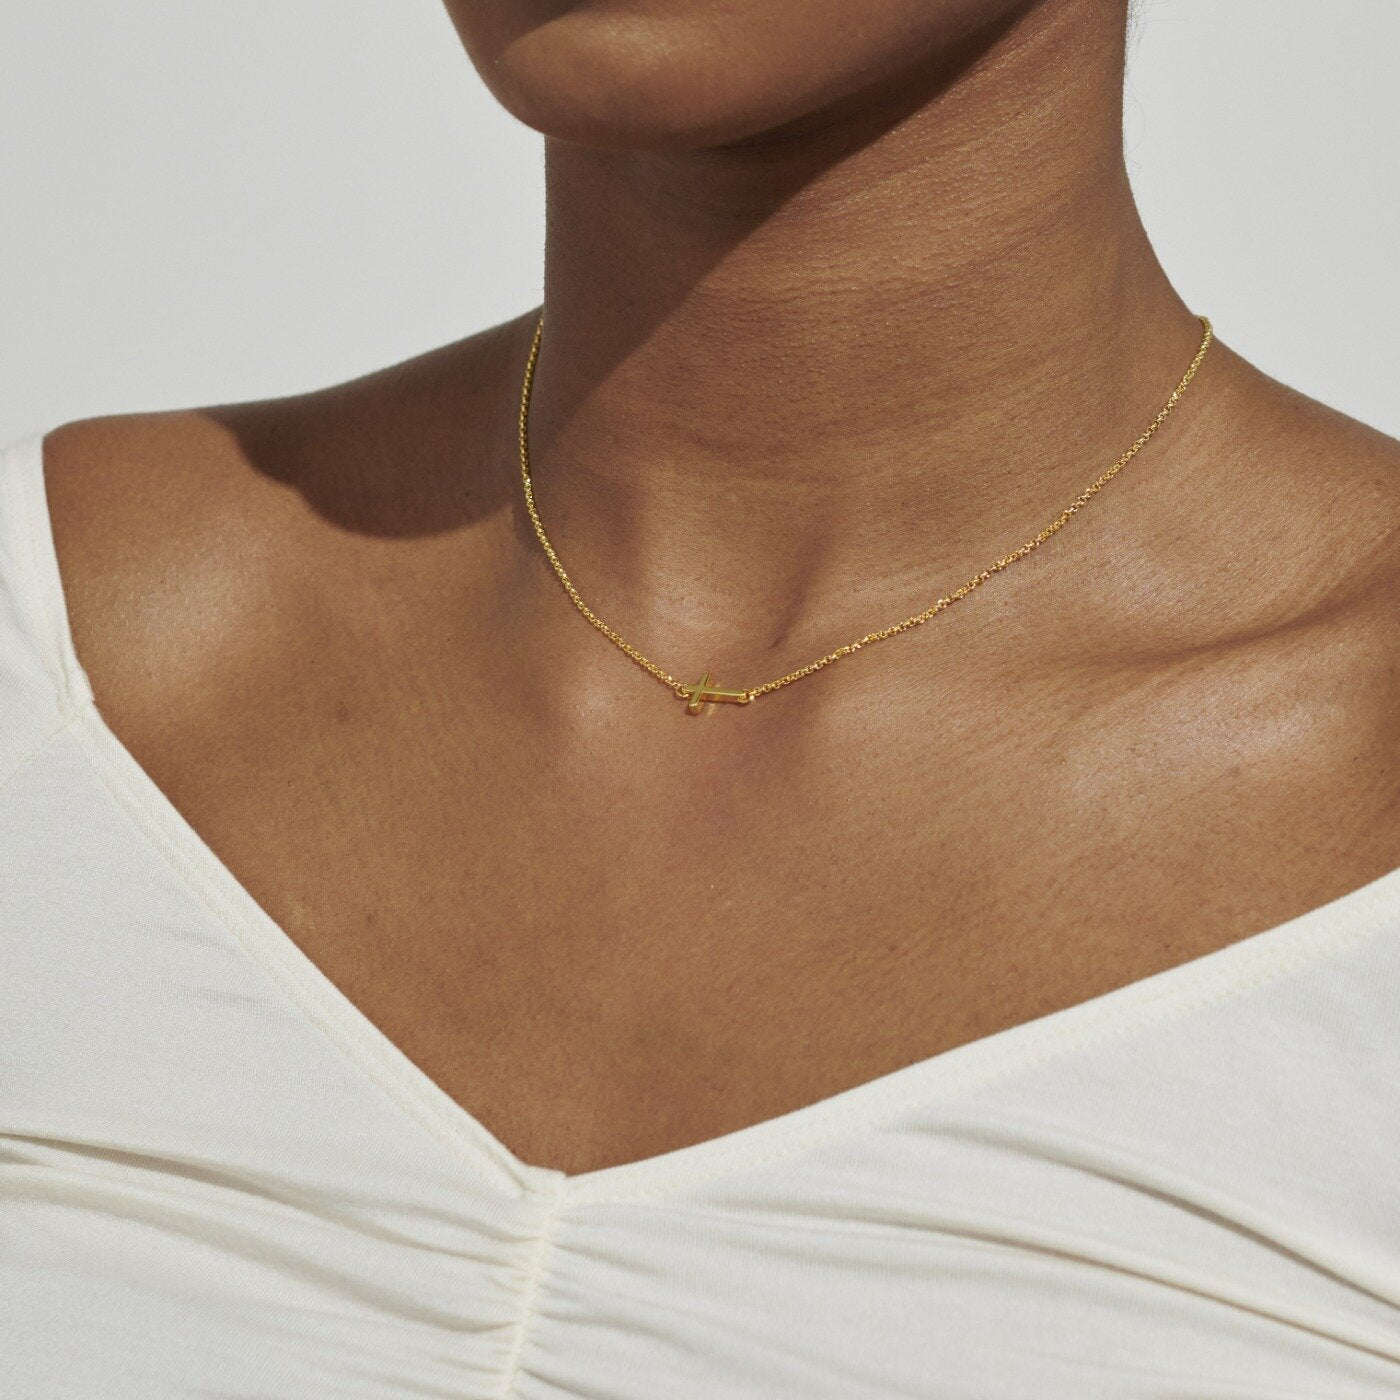 A Littles & Co. Necklace - Faith Gold